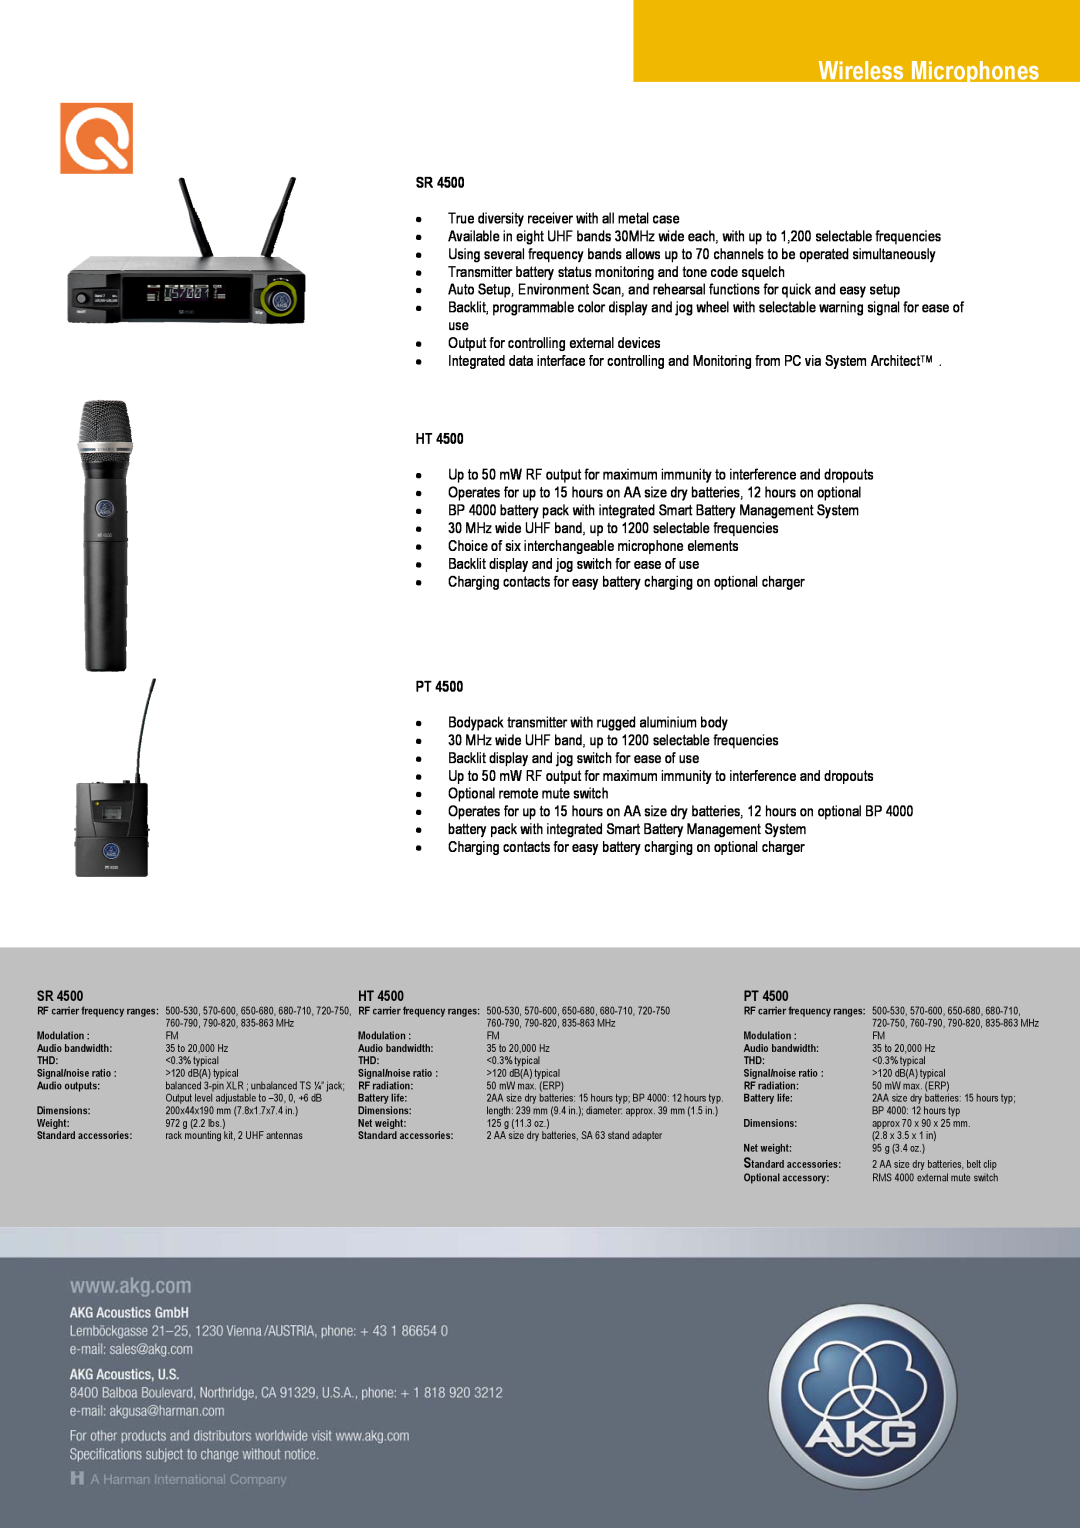 AKG Acoustics WMS 4500 manual Wireless Microphones, 500-530, 570-600, 650-680, 680-710 